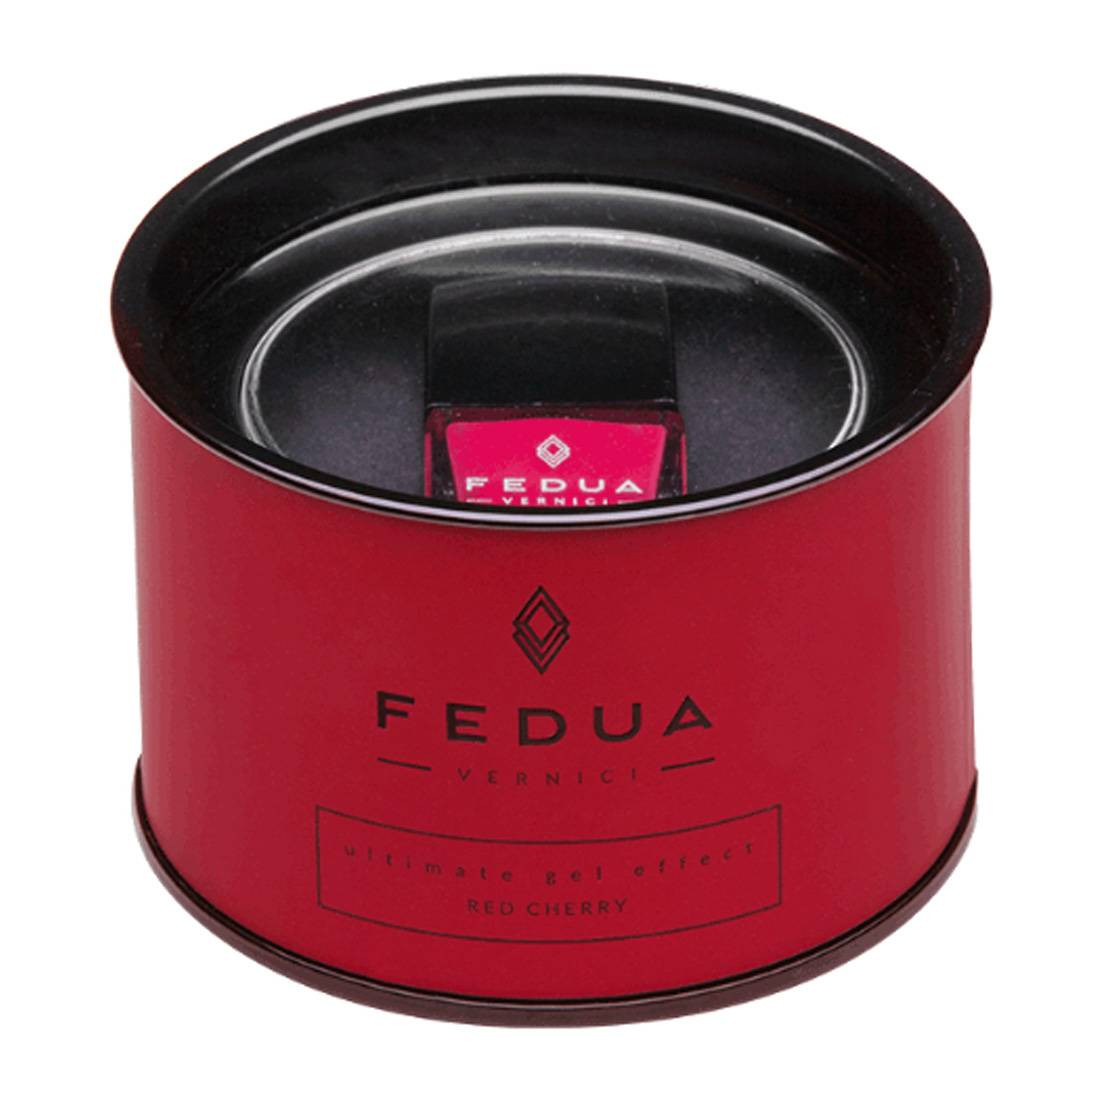 Fedua Vernici Ultimate Collection Red Cherry - Лак для ногтей Красная вишня